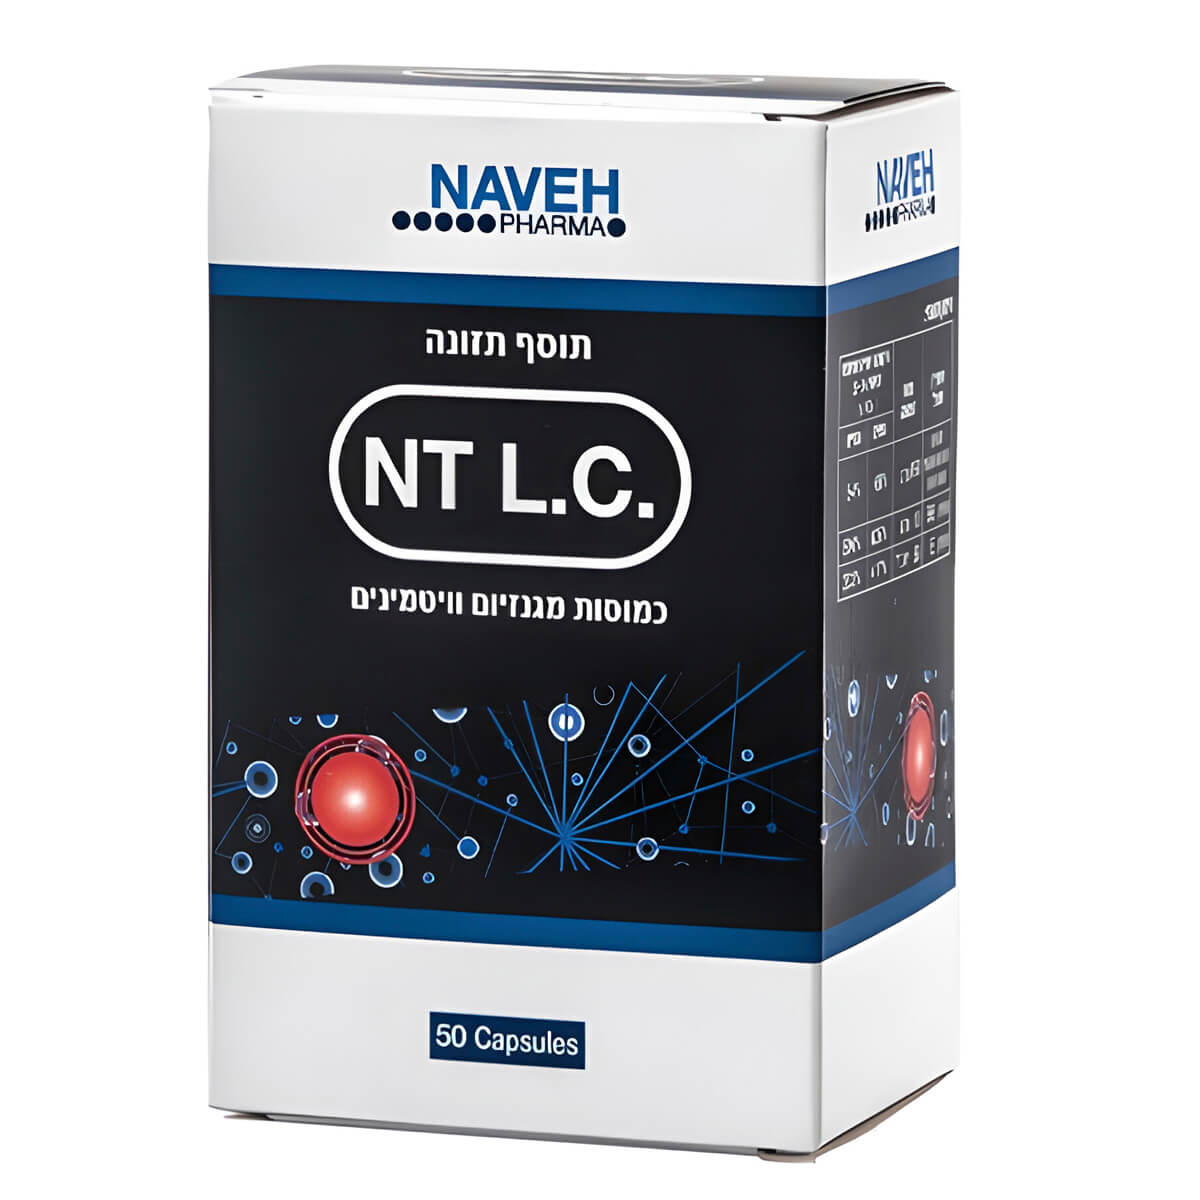 Пищевая добавка NT L.C. Naveh pharma для предотвращения судорог мышц ног во время сна, 50 капсул пищевая добавка fibromag naveh pharma для облегчения боли и усталости при фибромиалгии 30 капсул